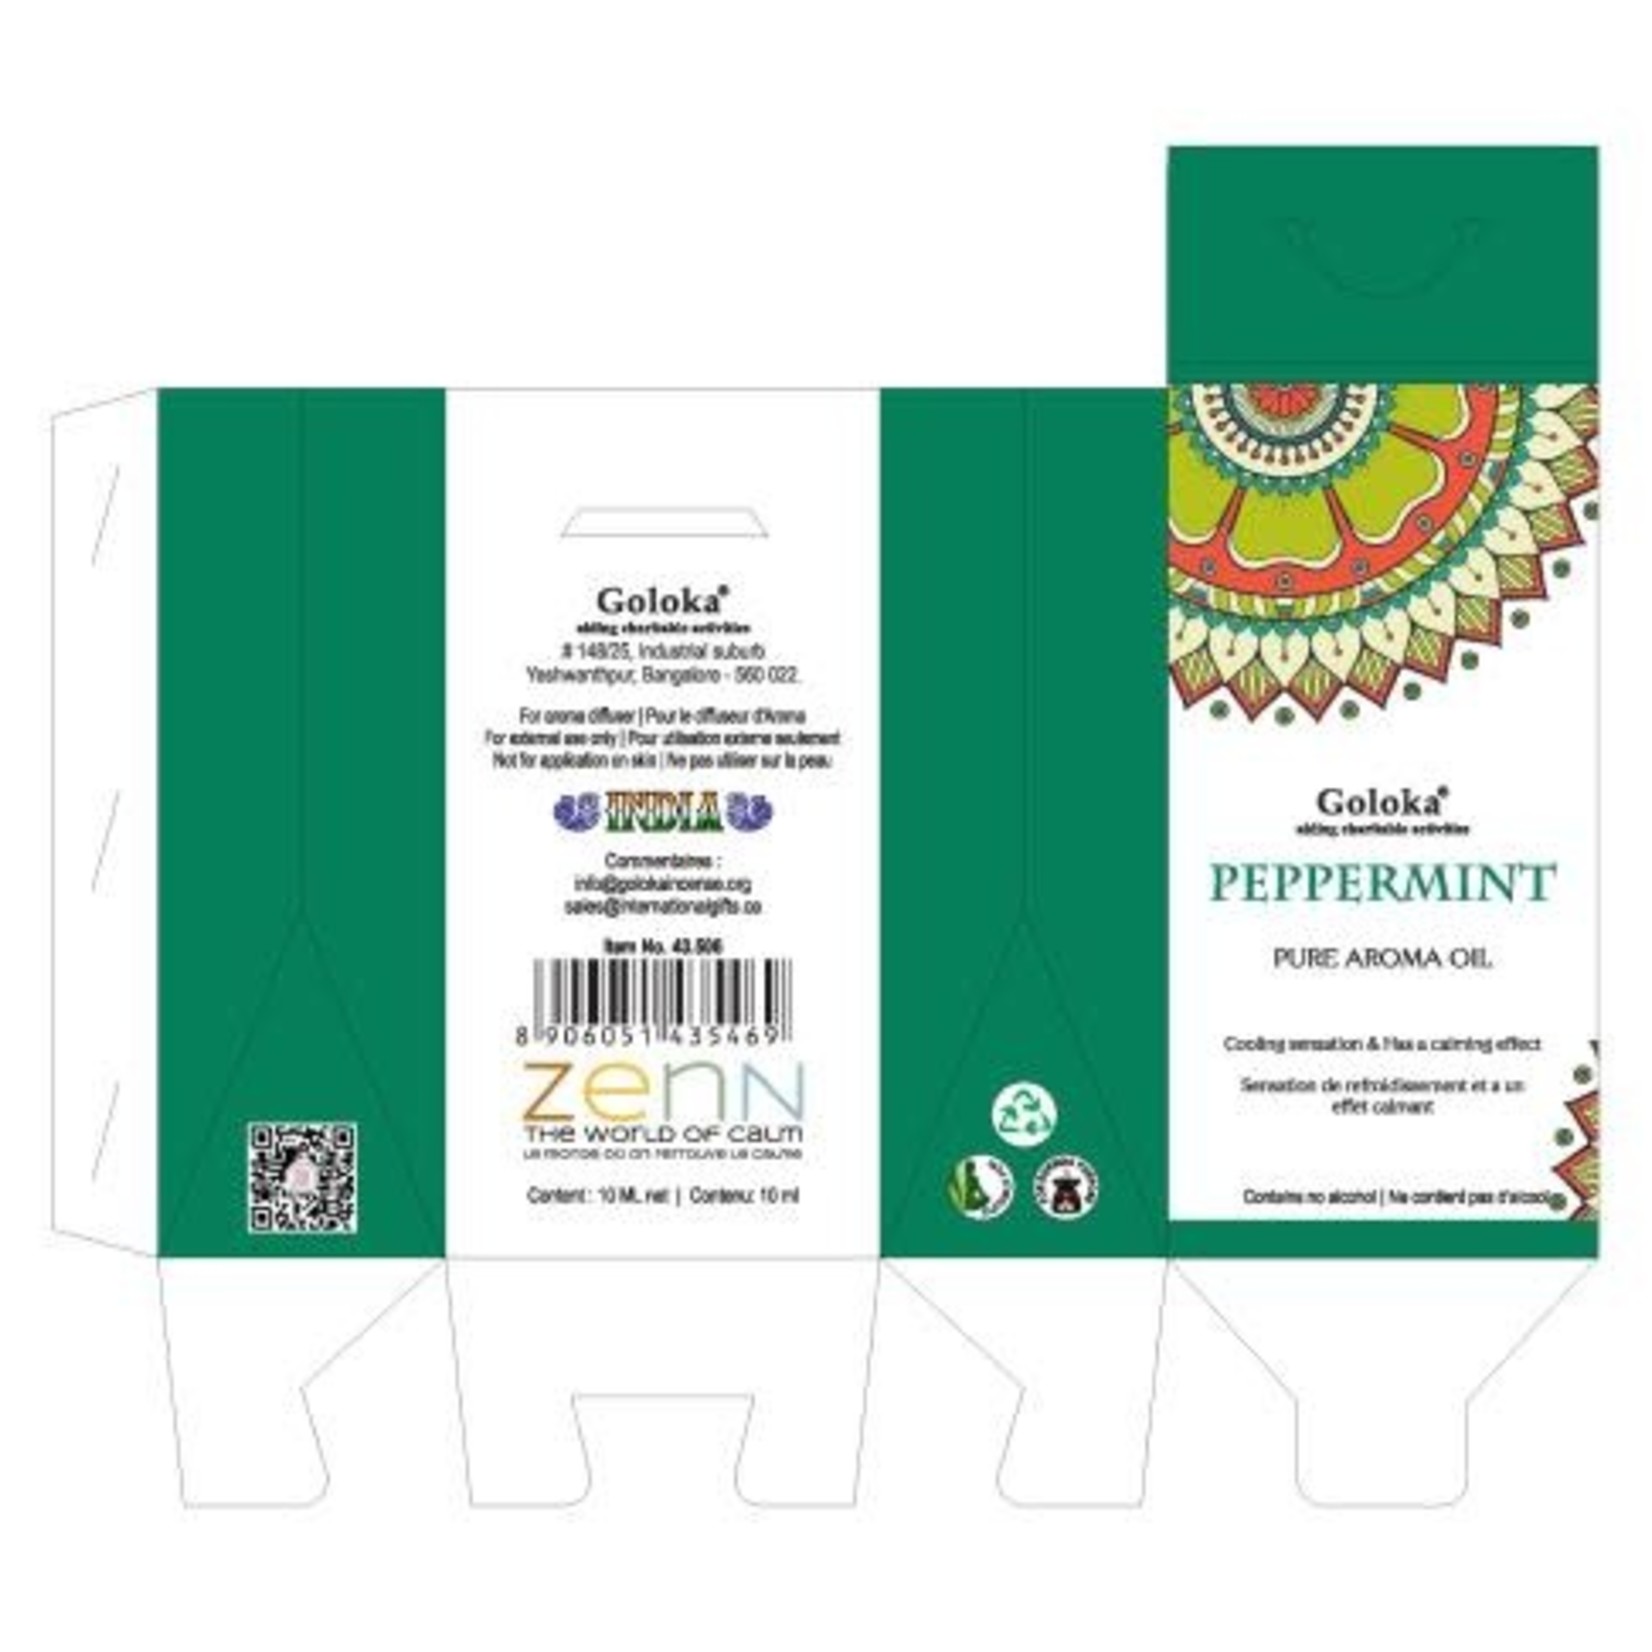 Peppermint Pure Aroma Oil - Goloka